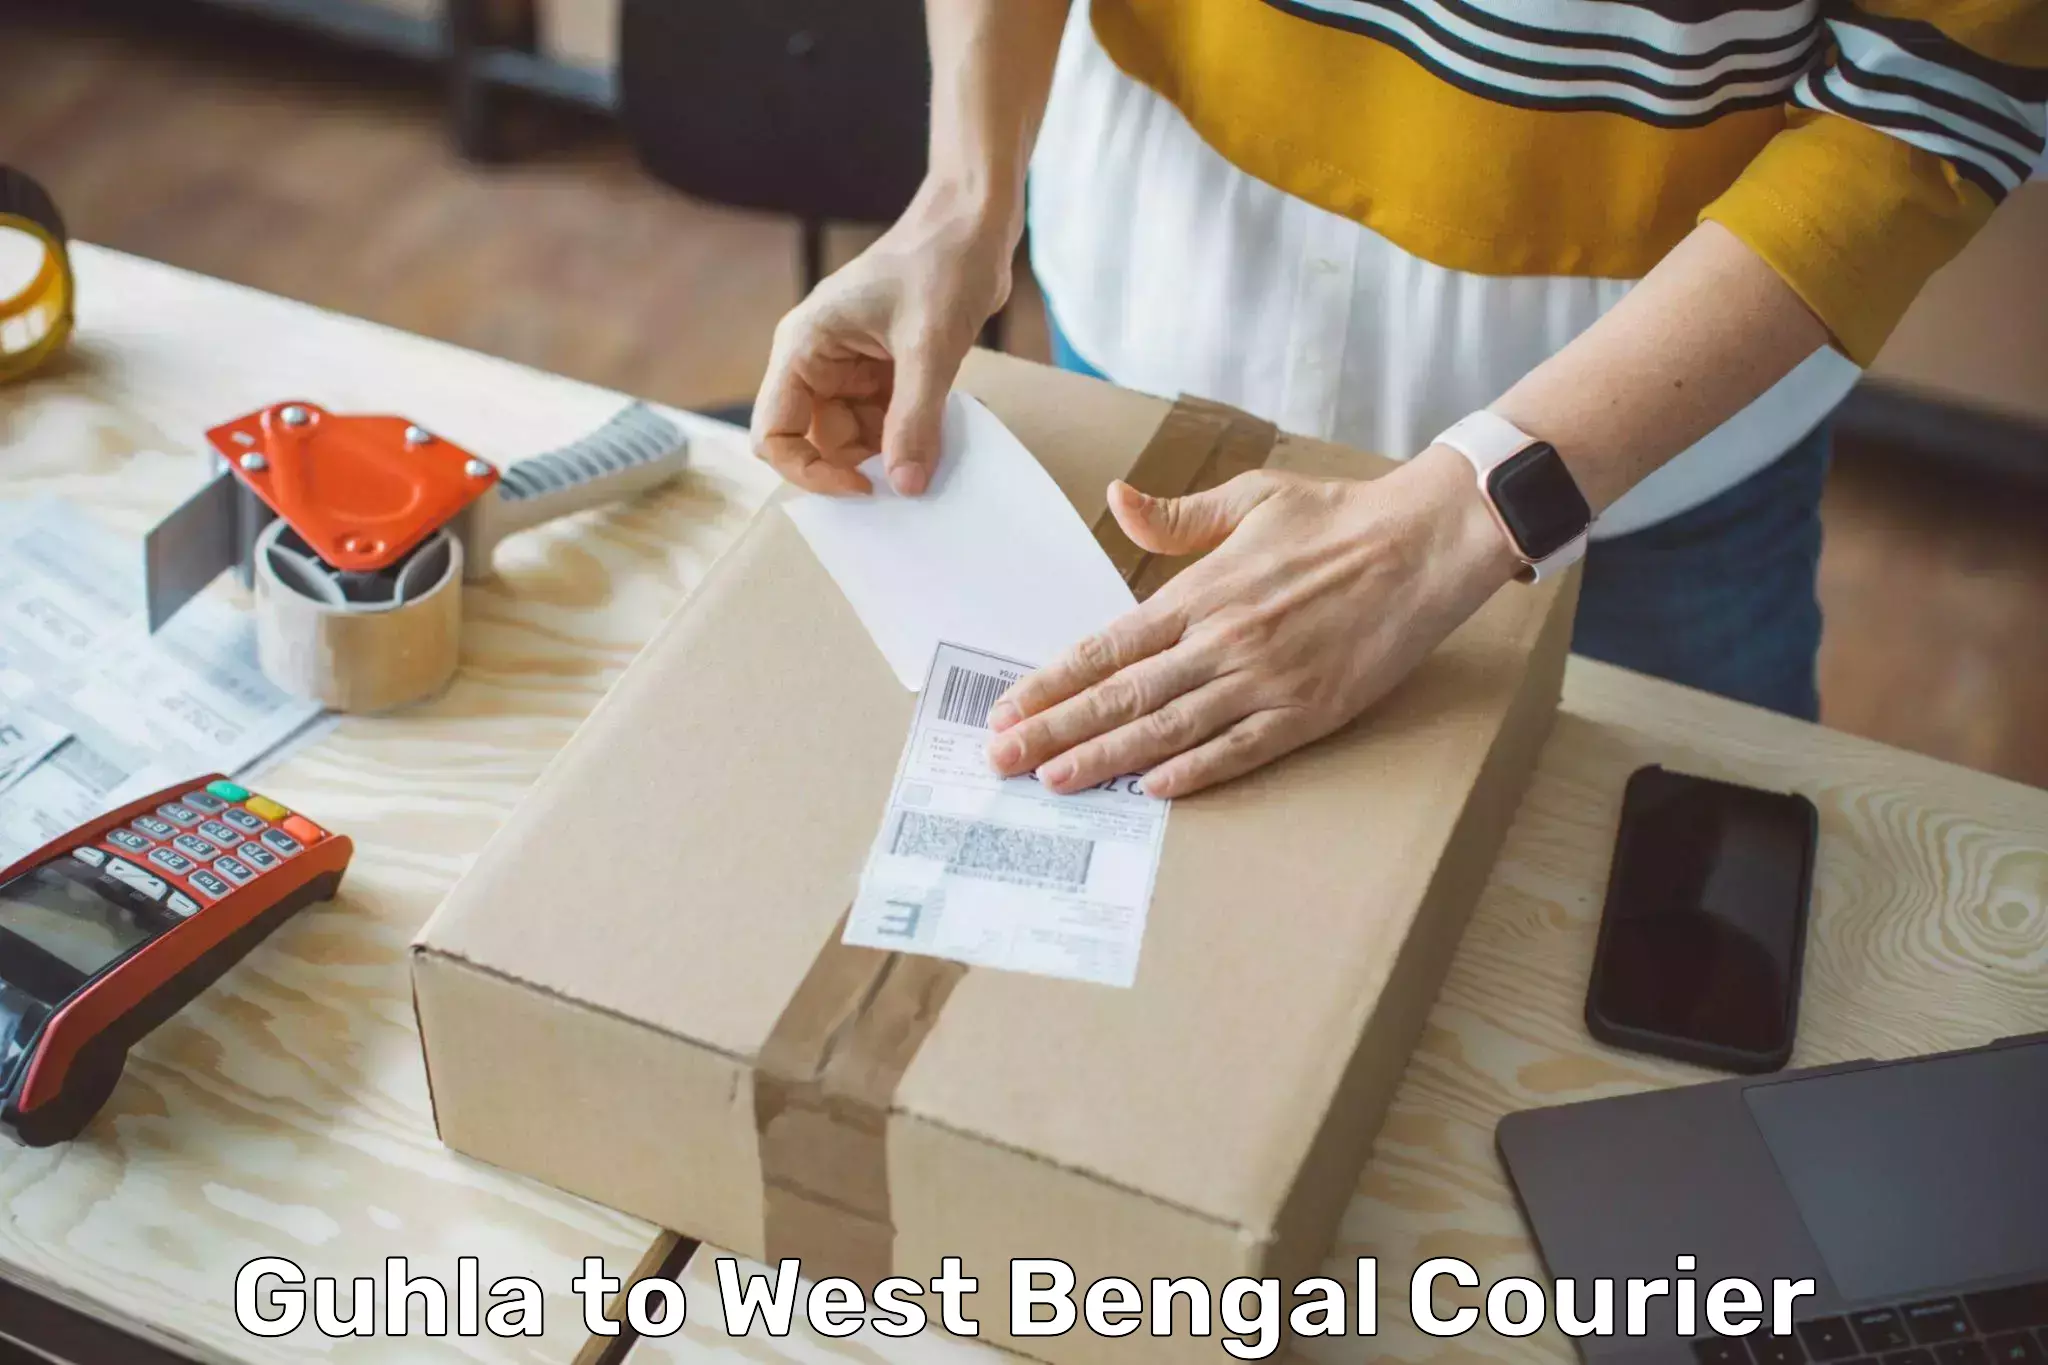 Logistics service provider Guhla to West Bengal